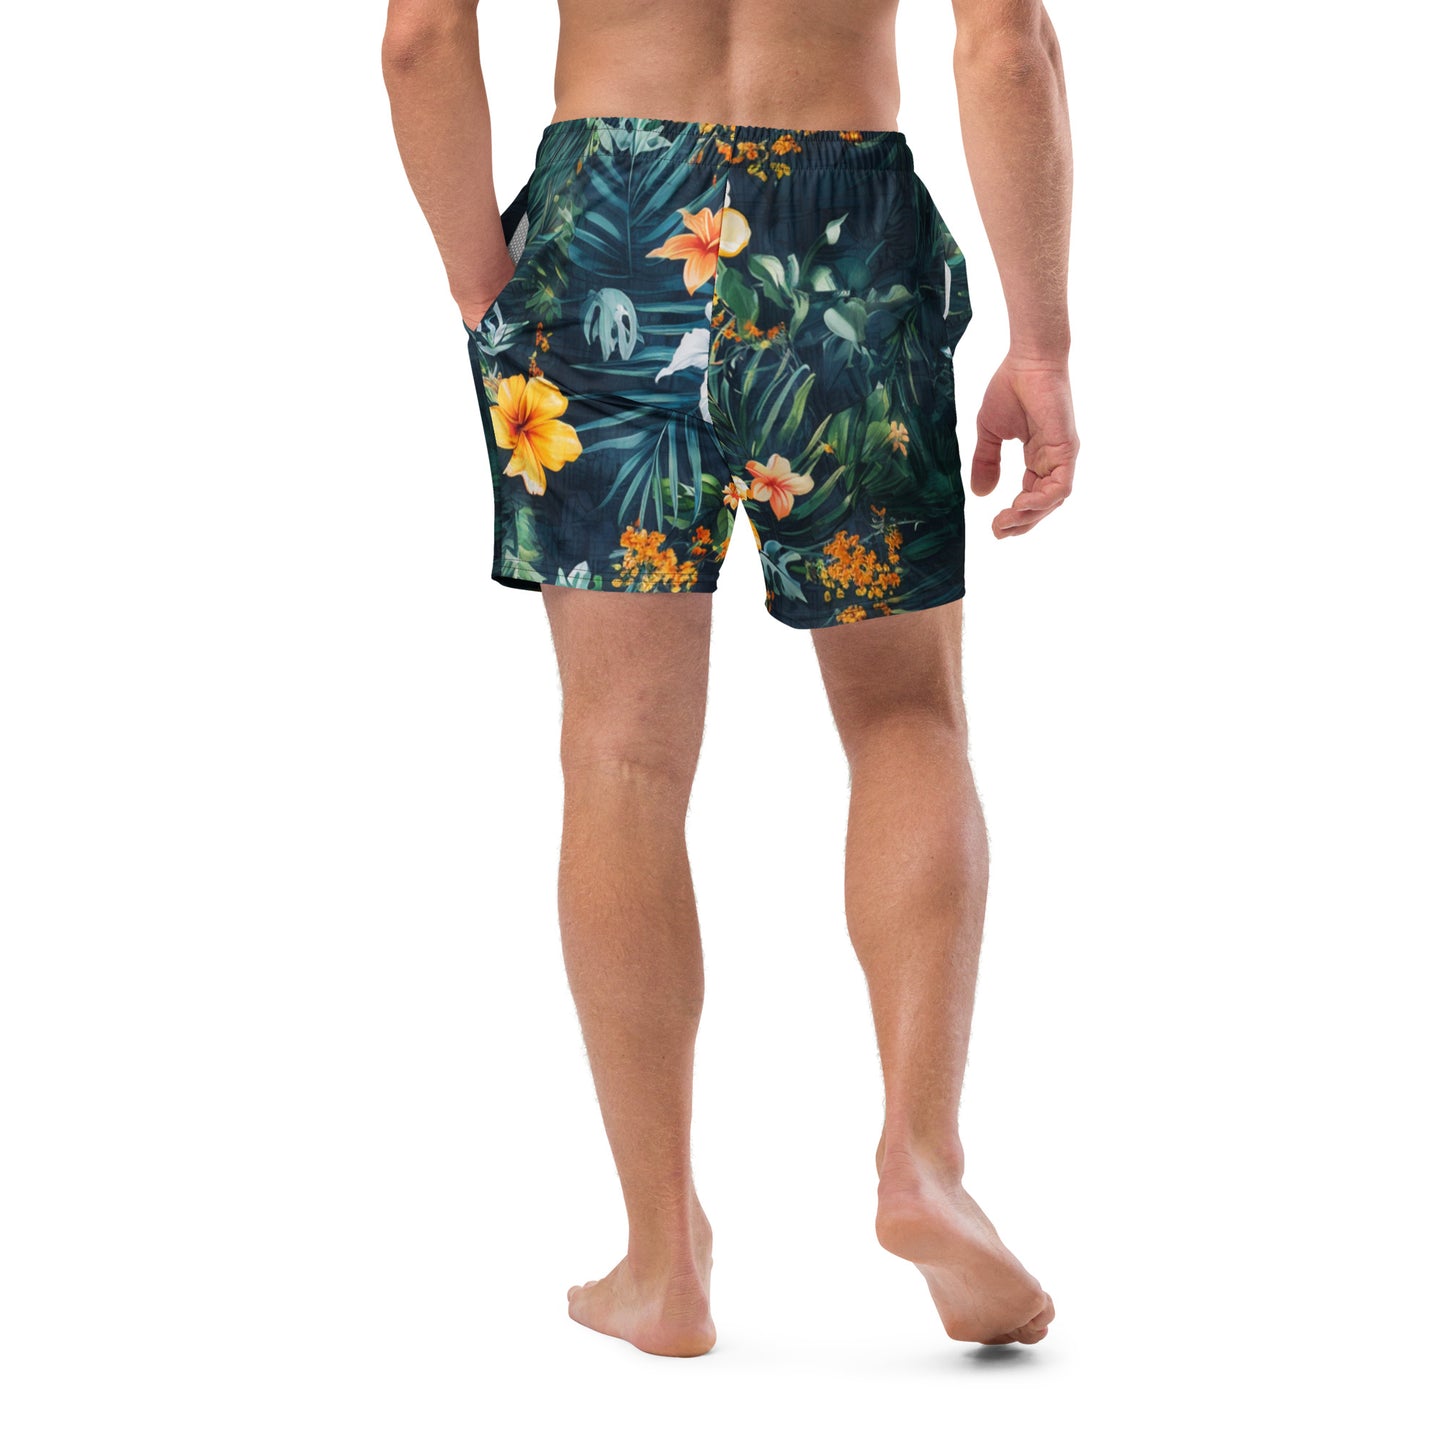 Men's tropical print swim trunks